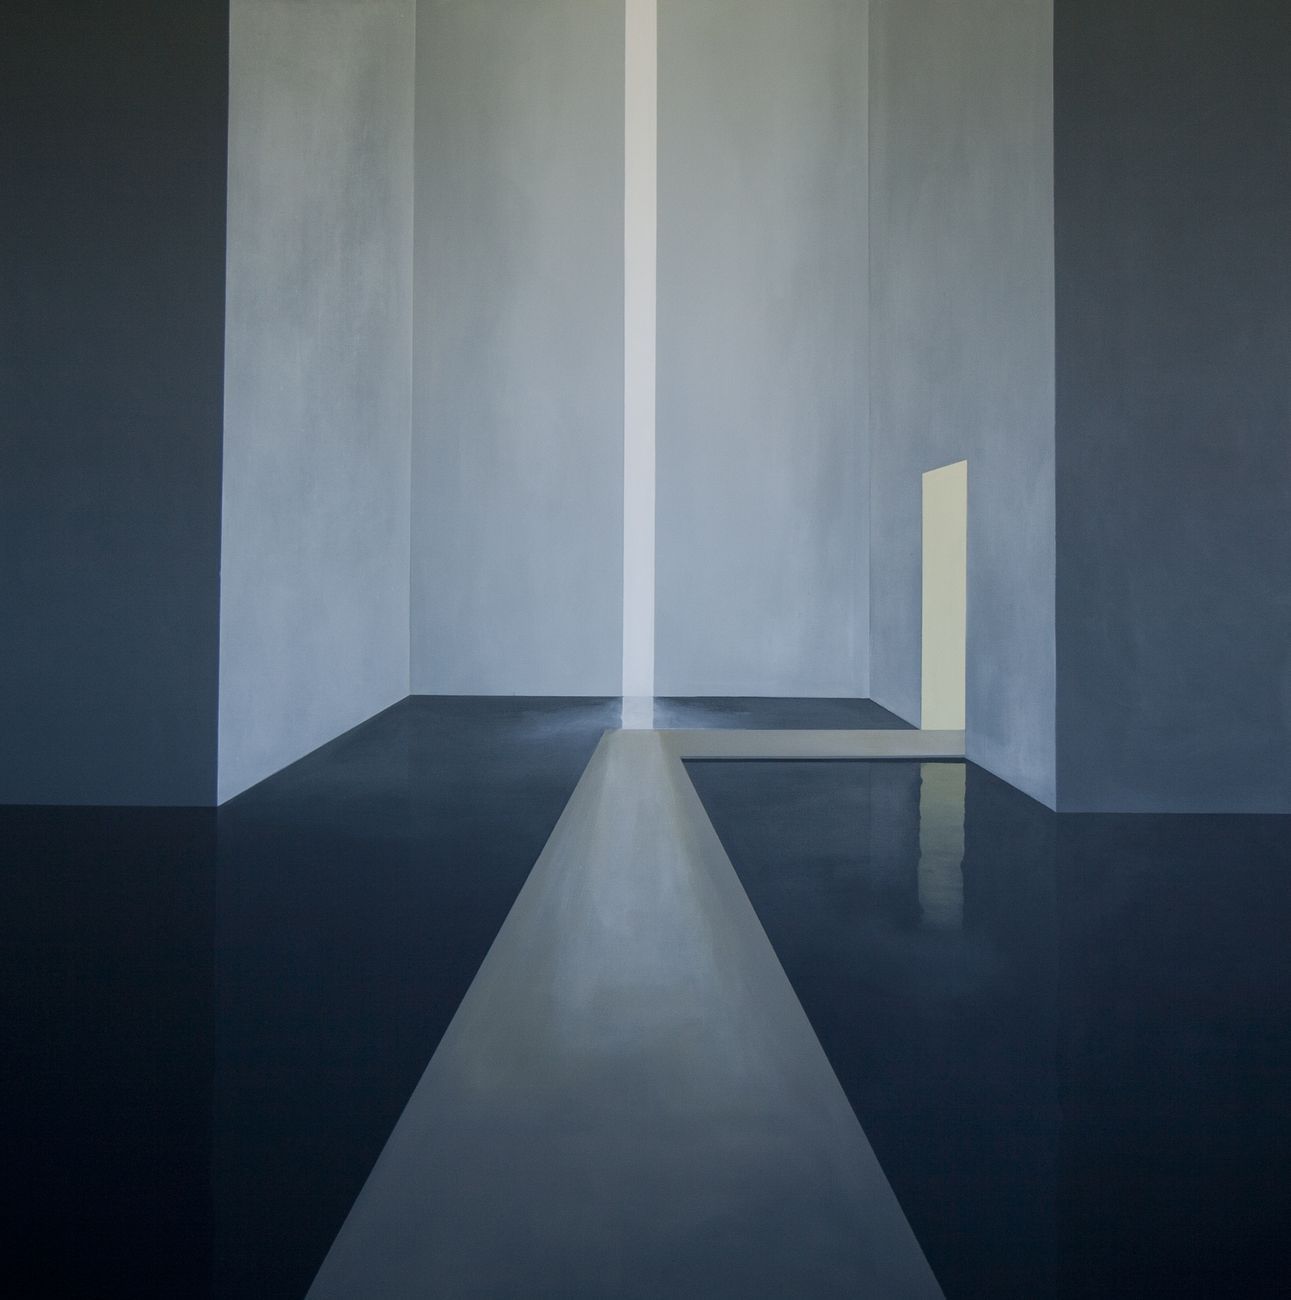 Pierpaolo Curti, Variation of the Theme, 2014, tecnica mista su tela, 160x160 cm